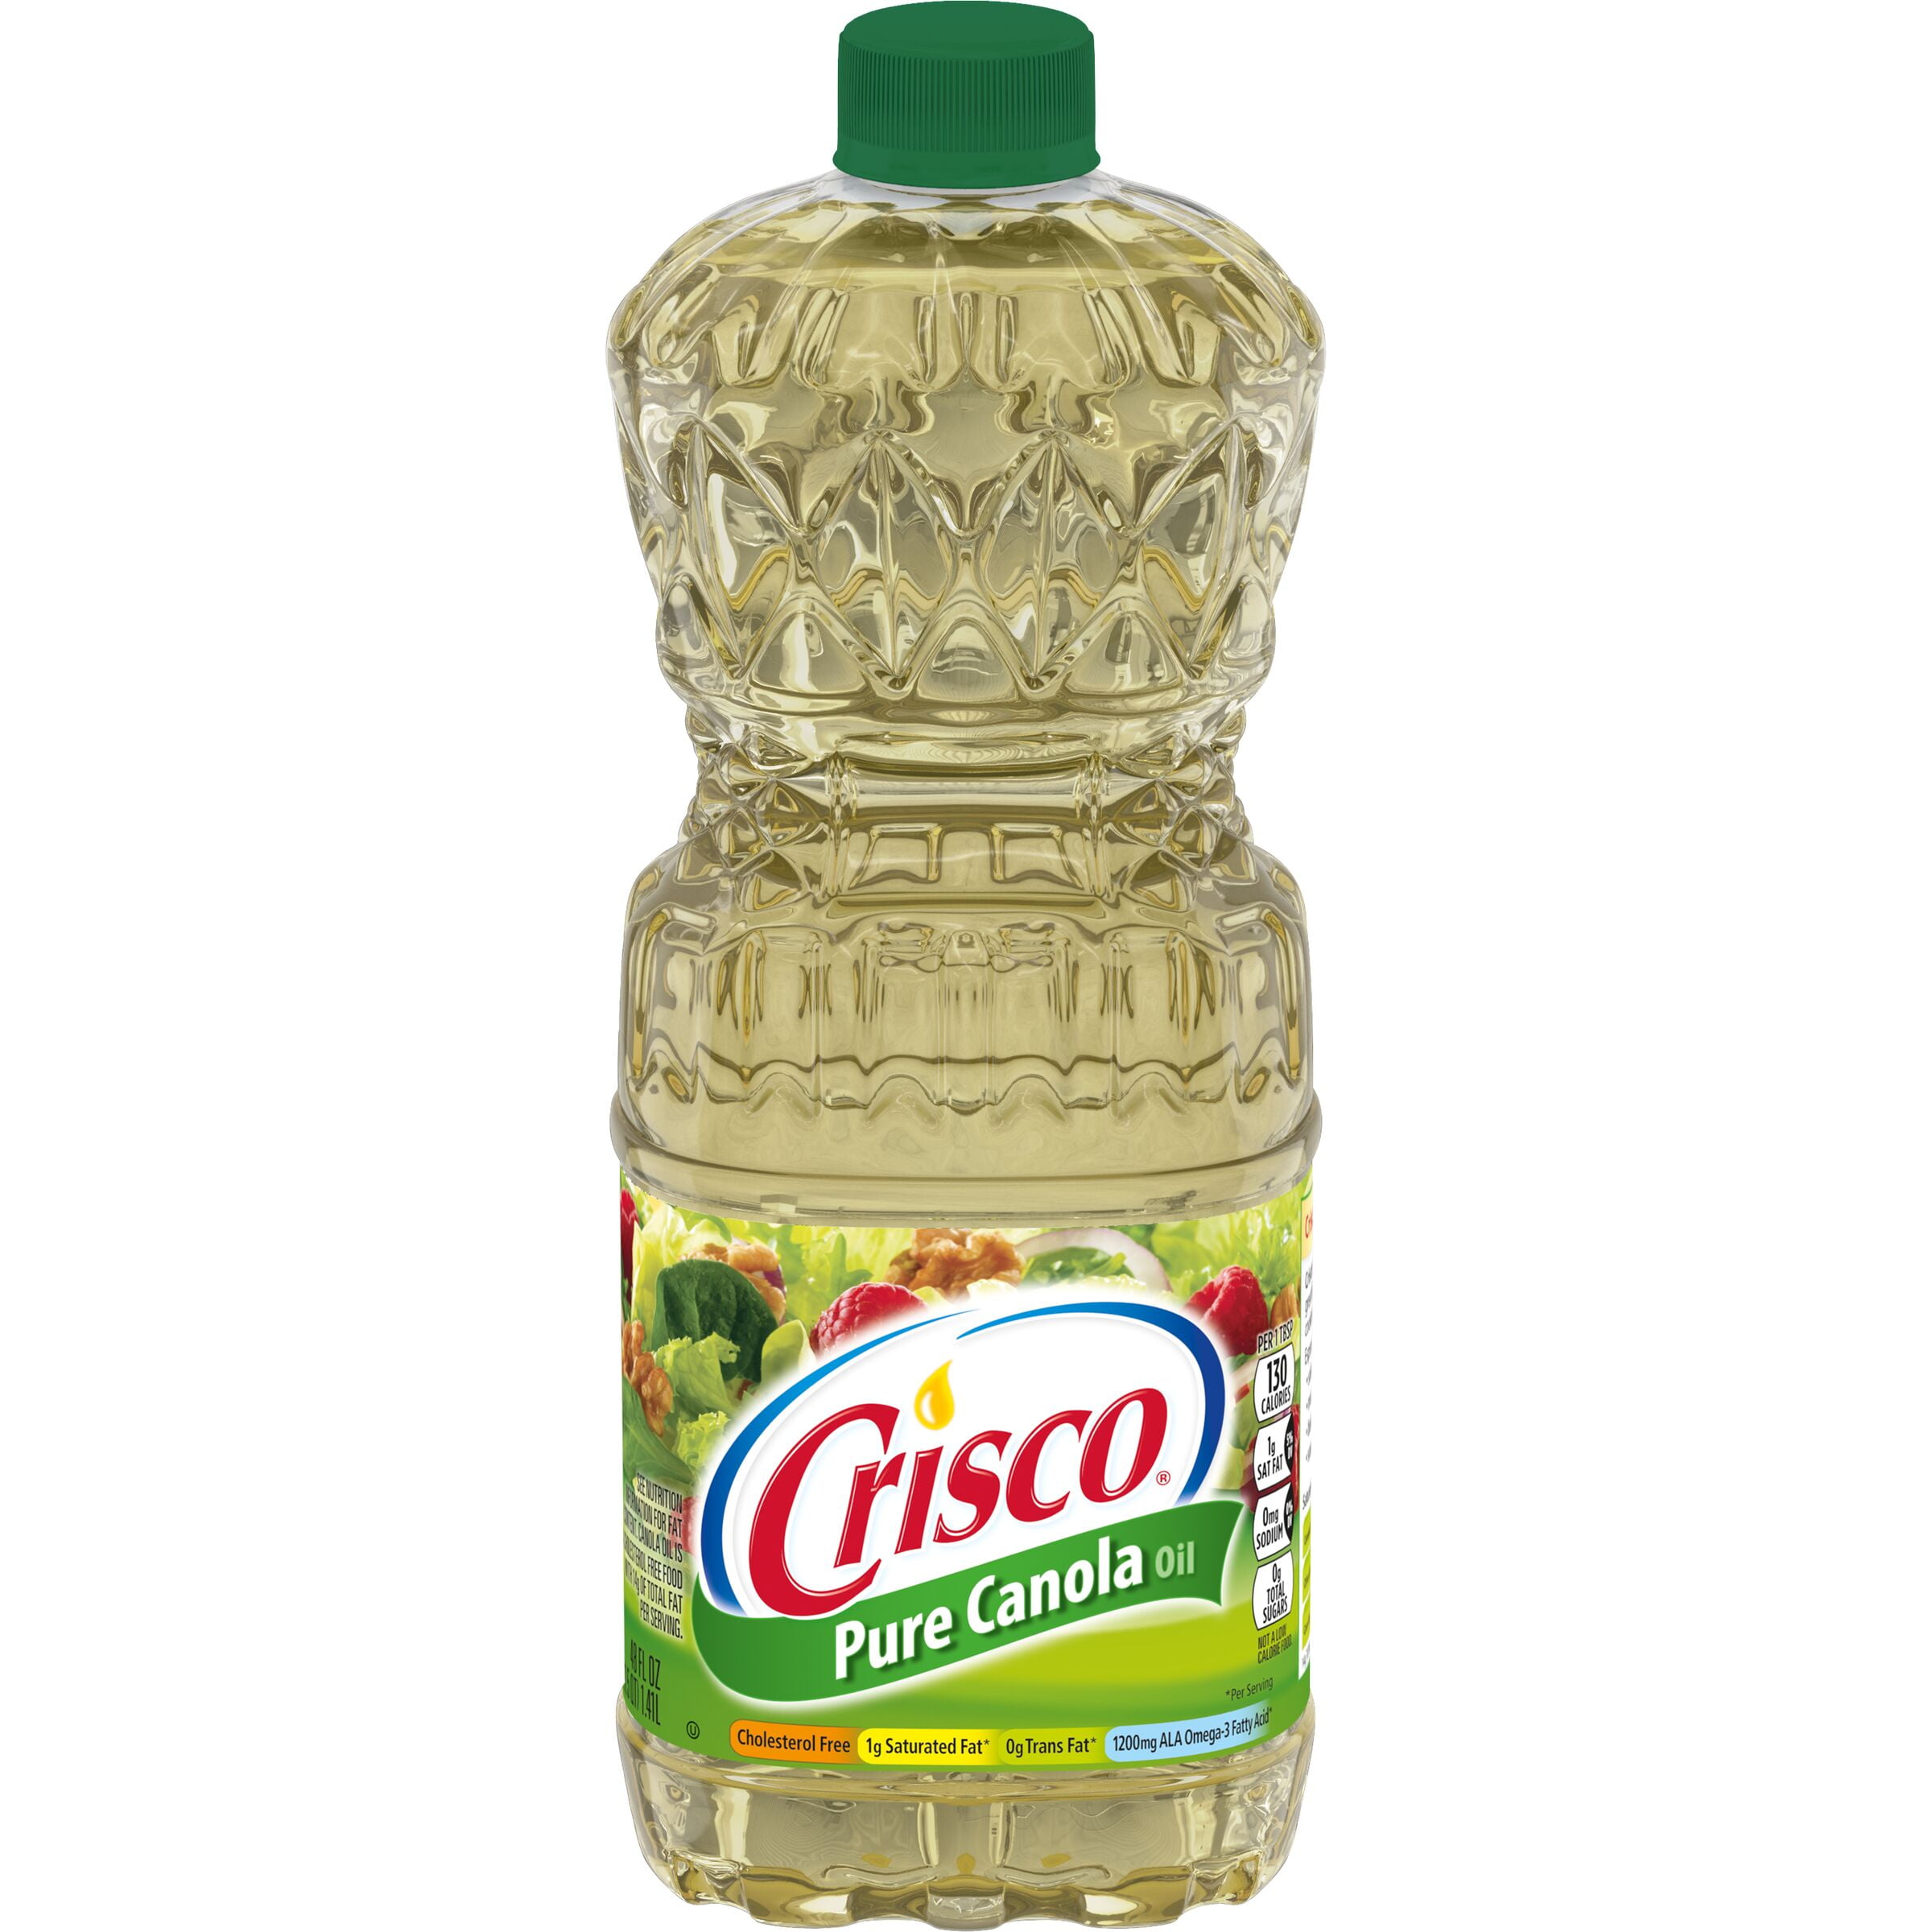 Crisco Pure Canola Oil, 48-Fluid Ounce - Walmart.com - Walmart.com